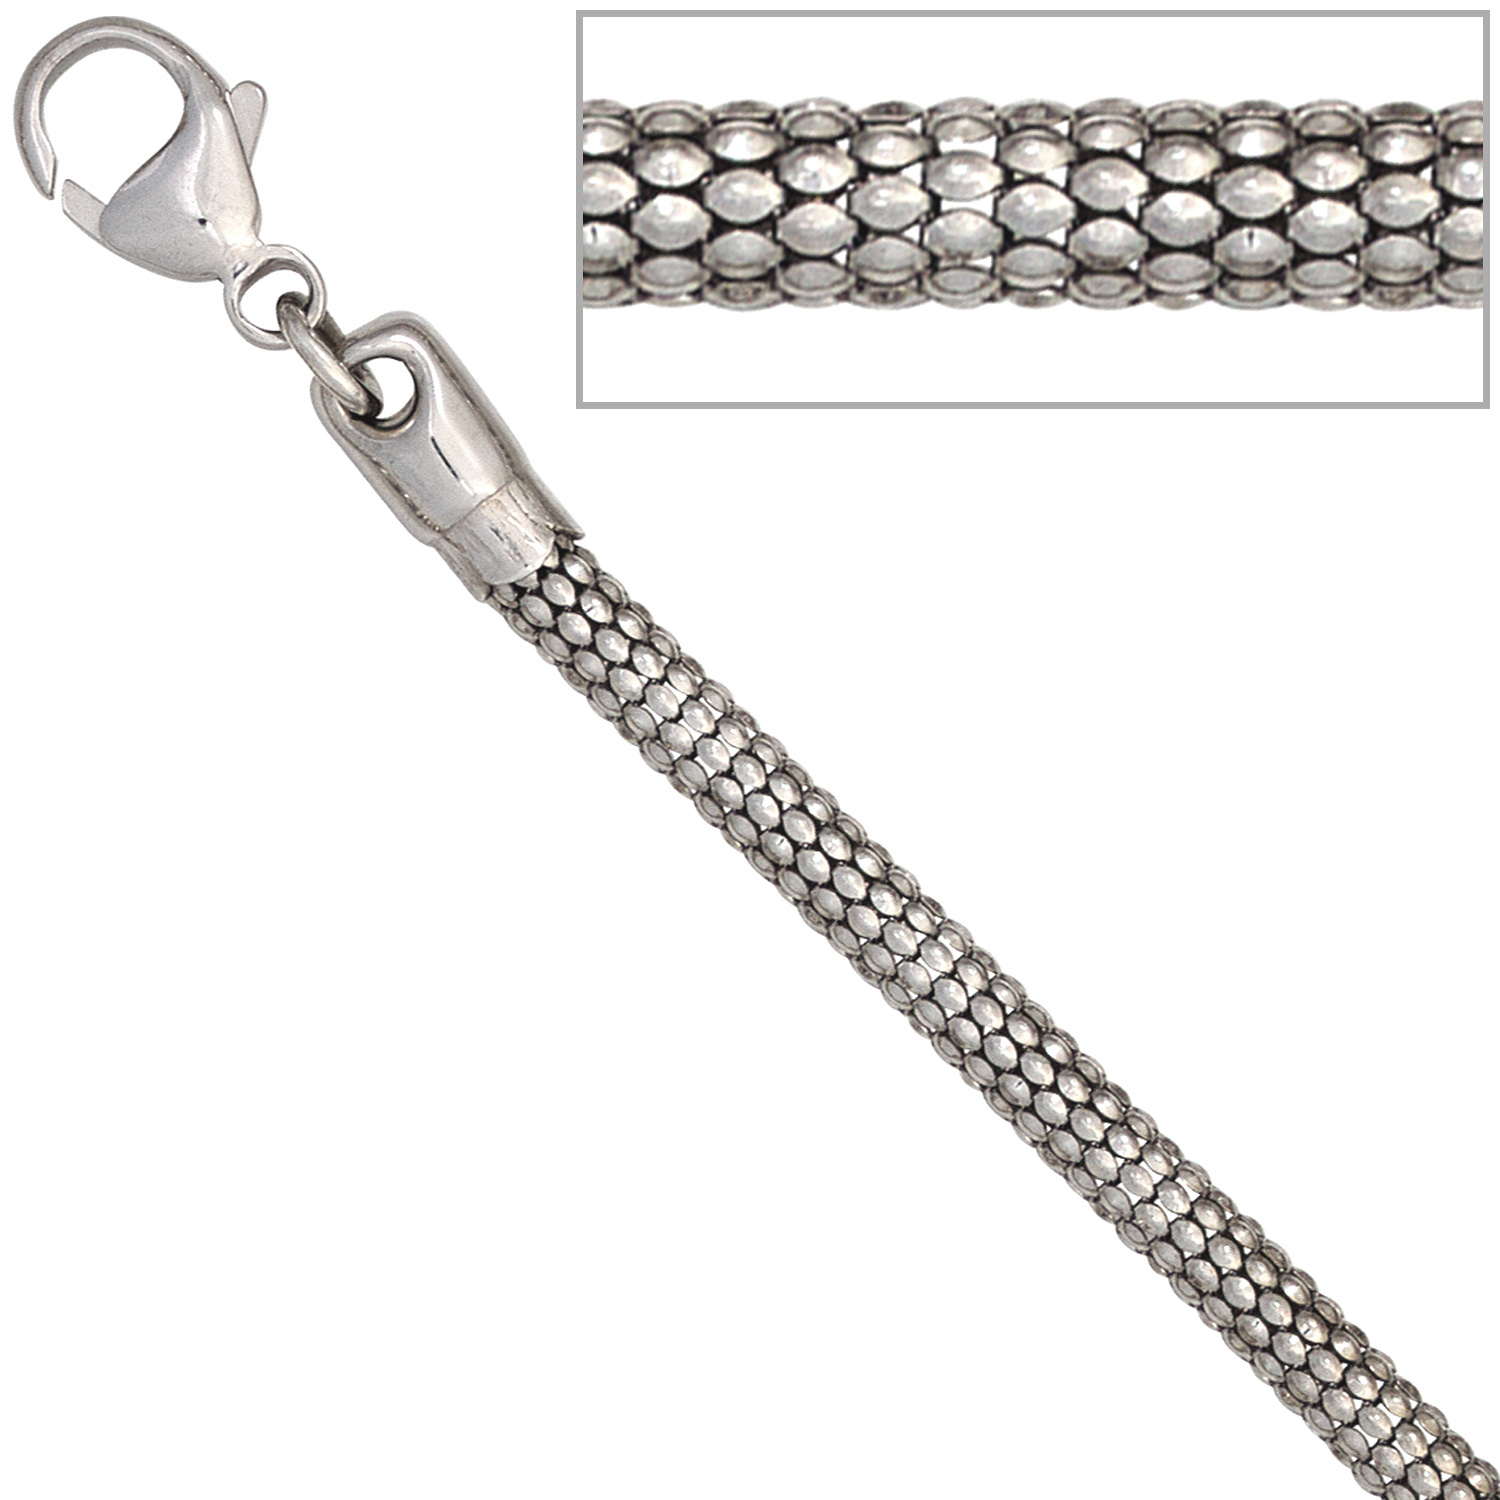 42 Kette Silber 925 Sterling – Karabiner Halskette rhodiniert Silberkette cm